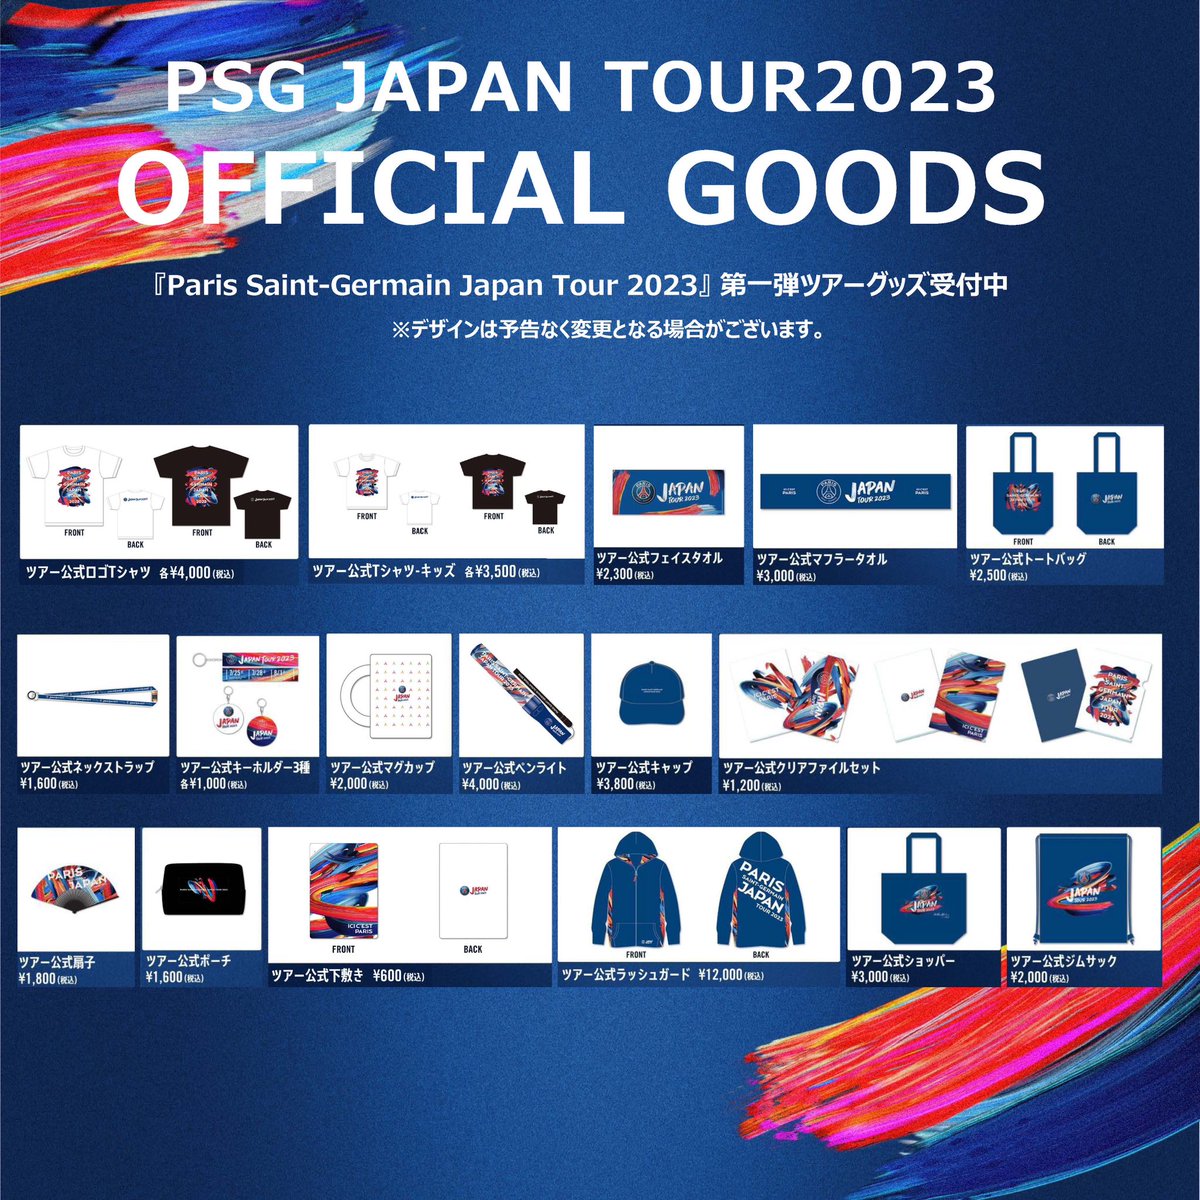 PSG JAPAN TOUR 2023 on Twitter: 